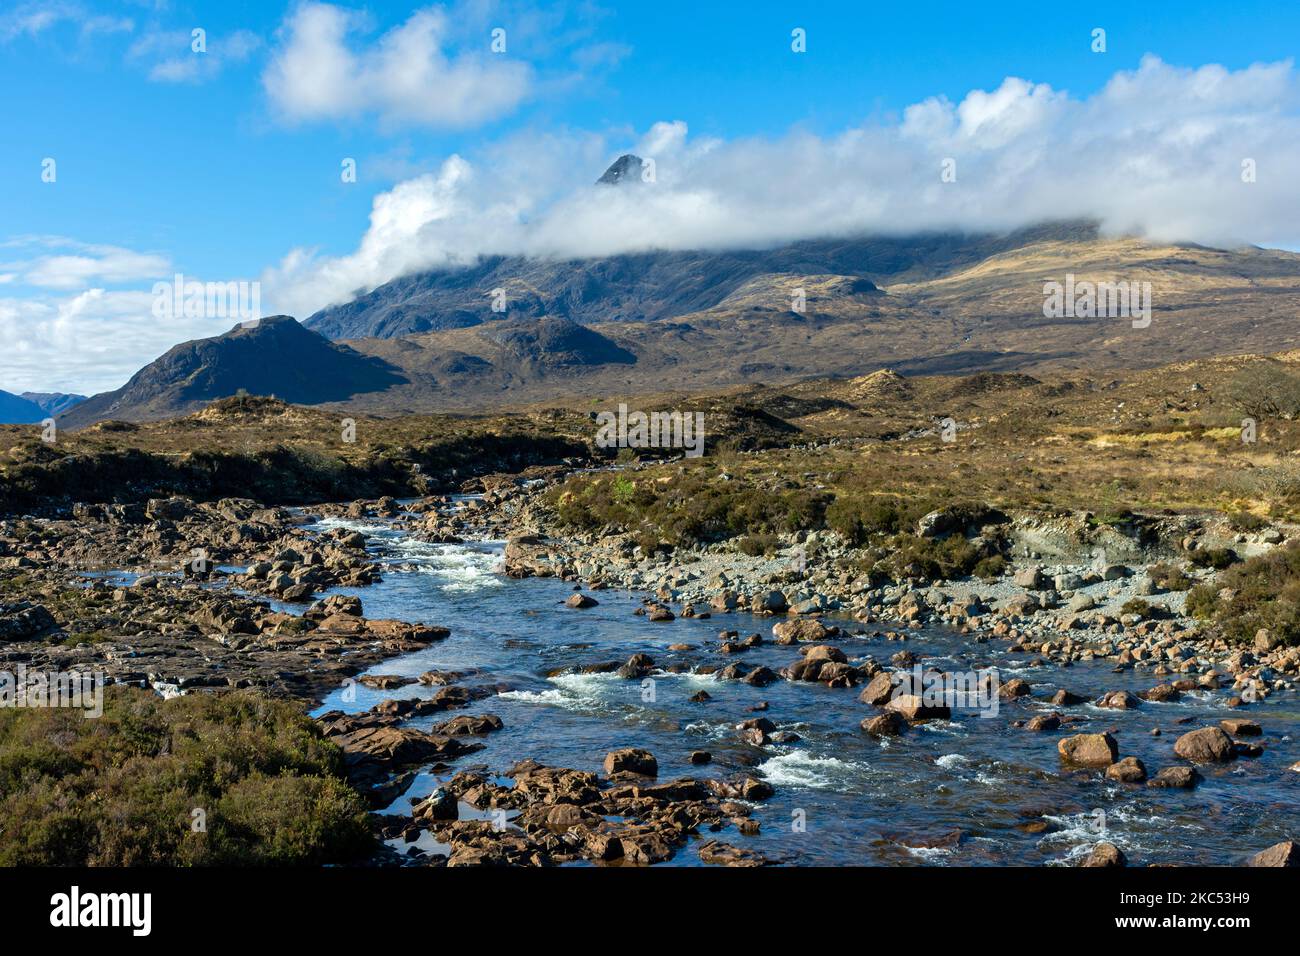 Sgurr nan Gillean and the Cuillin mountains, from the river Sligachan, at Sligachan, Isle of Skye, Scotland, UK. Stock Photo